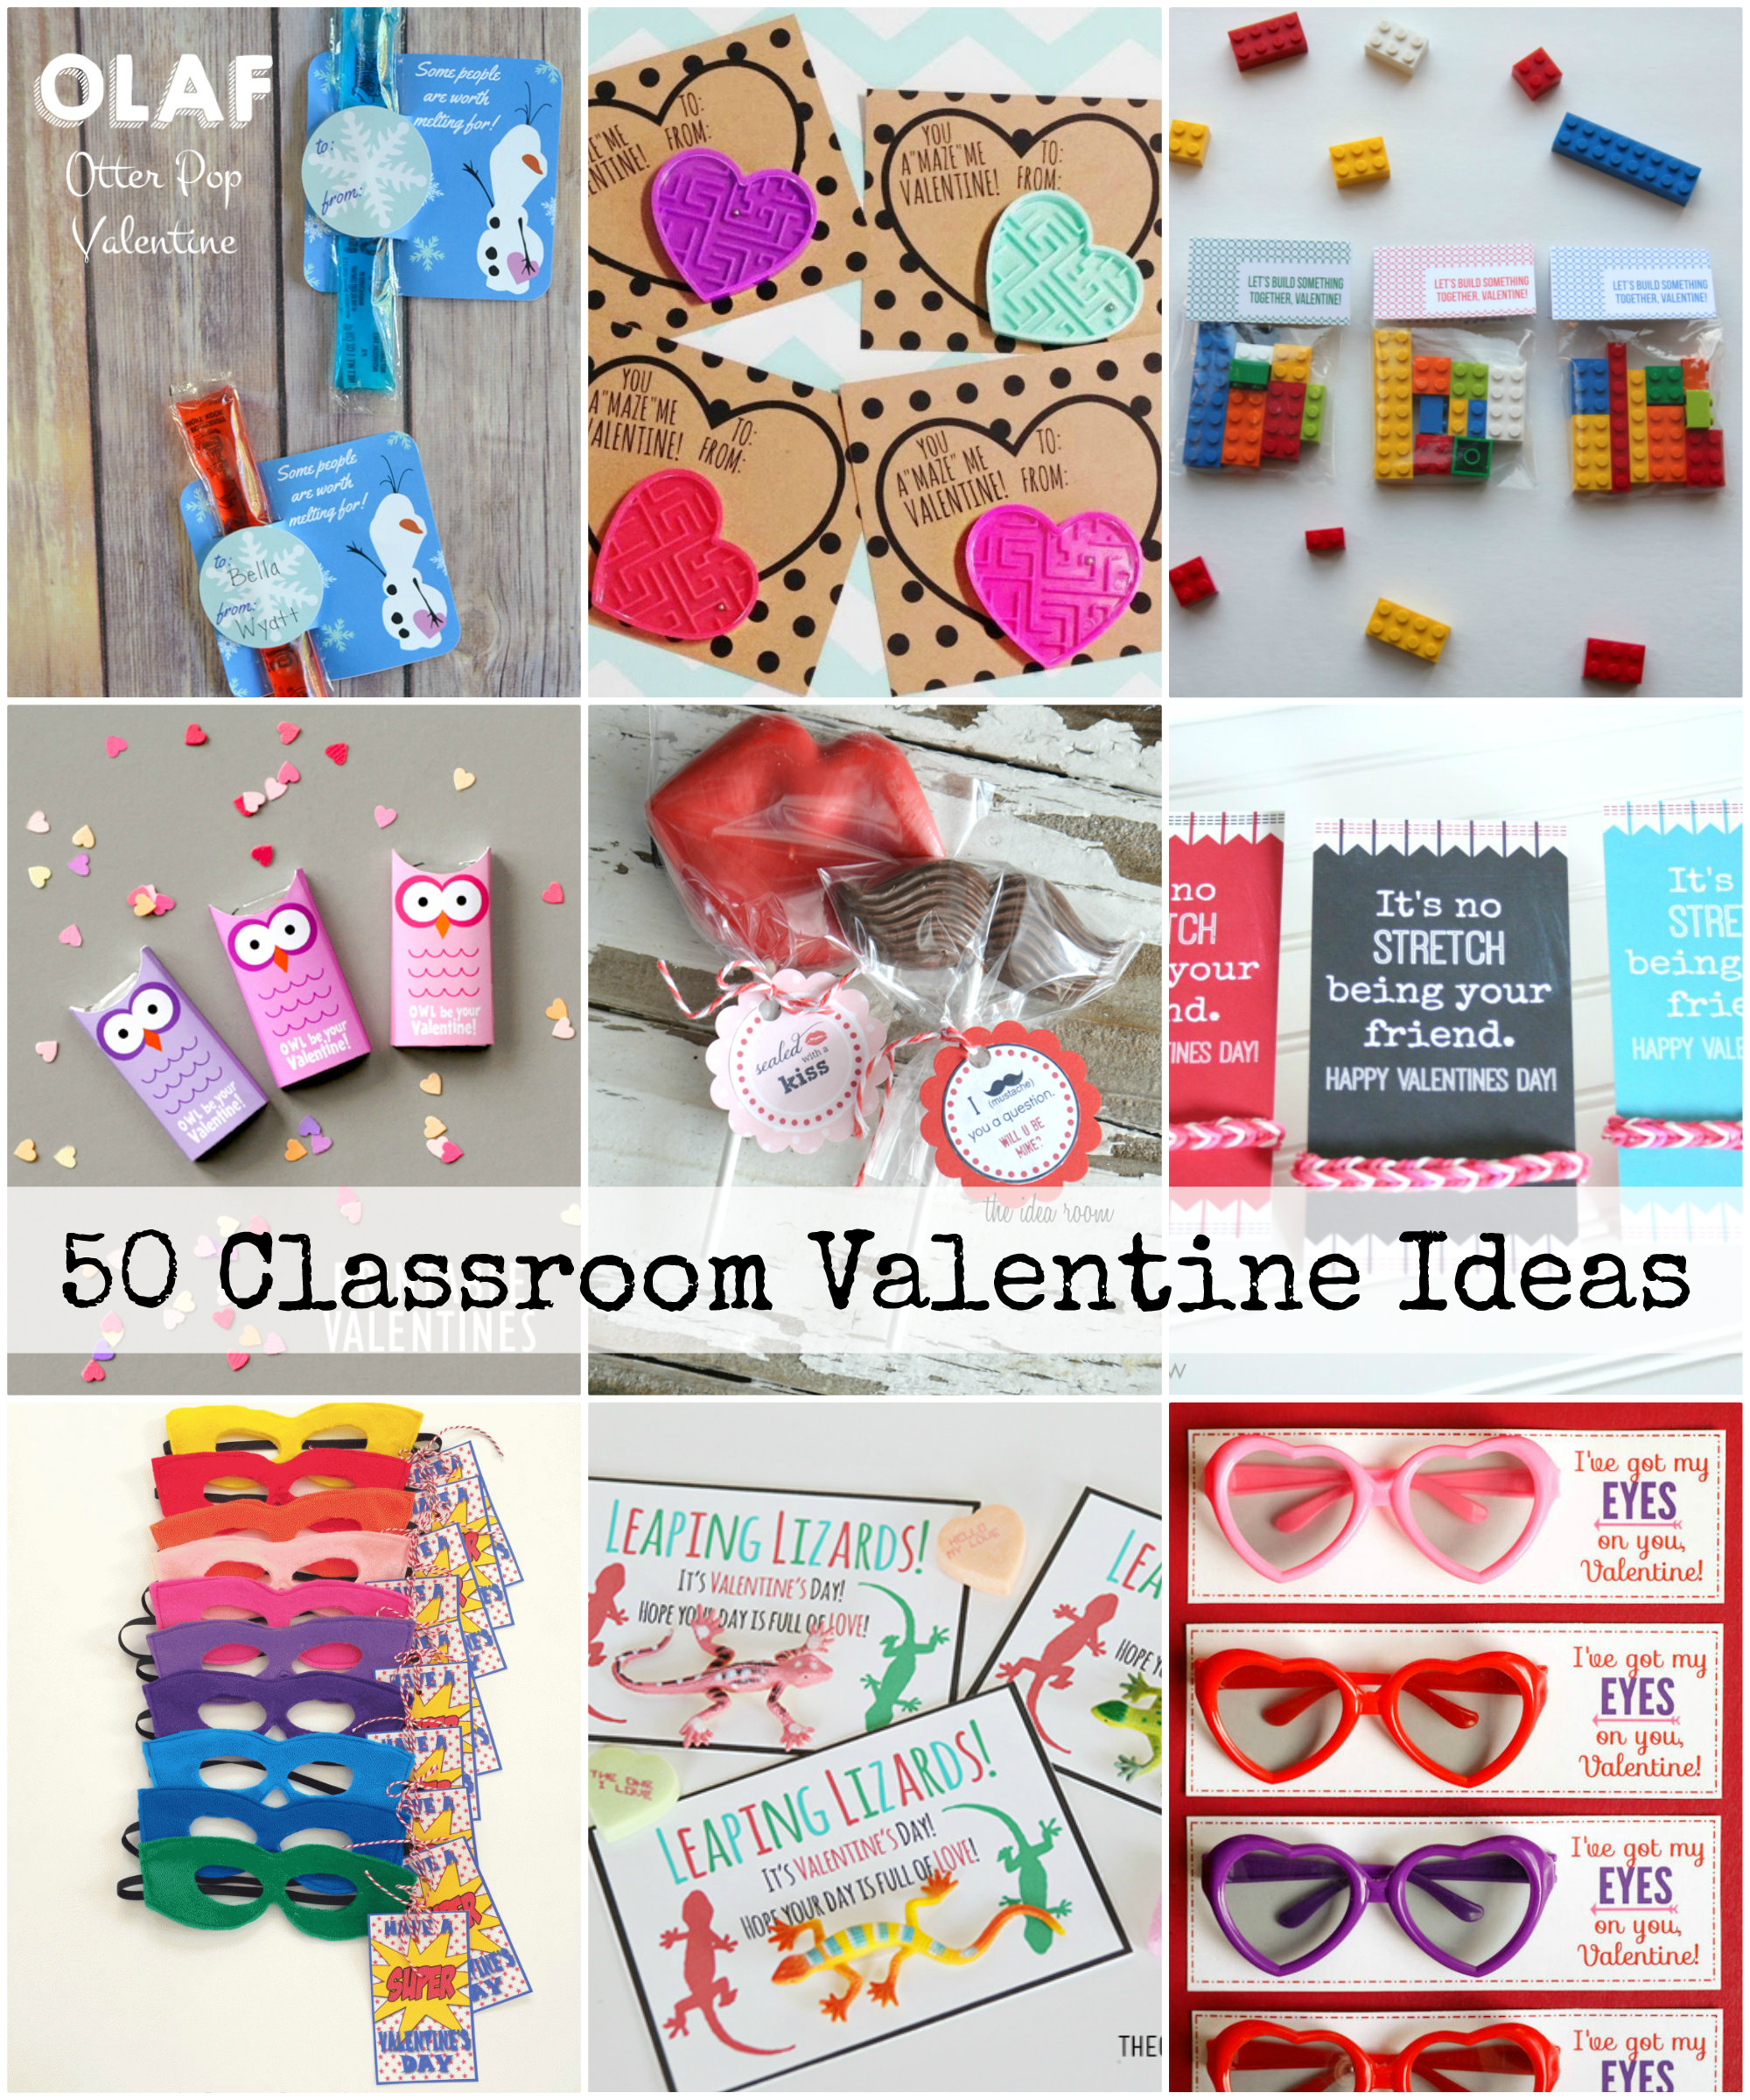 Valentine Box Ideas to Wow the Class! 